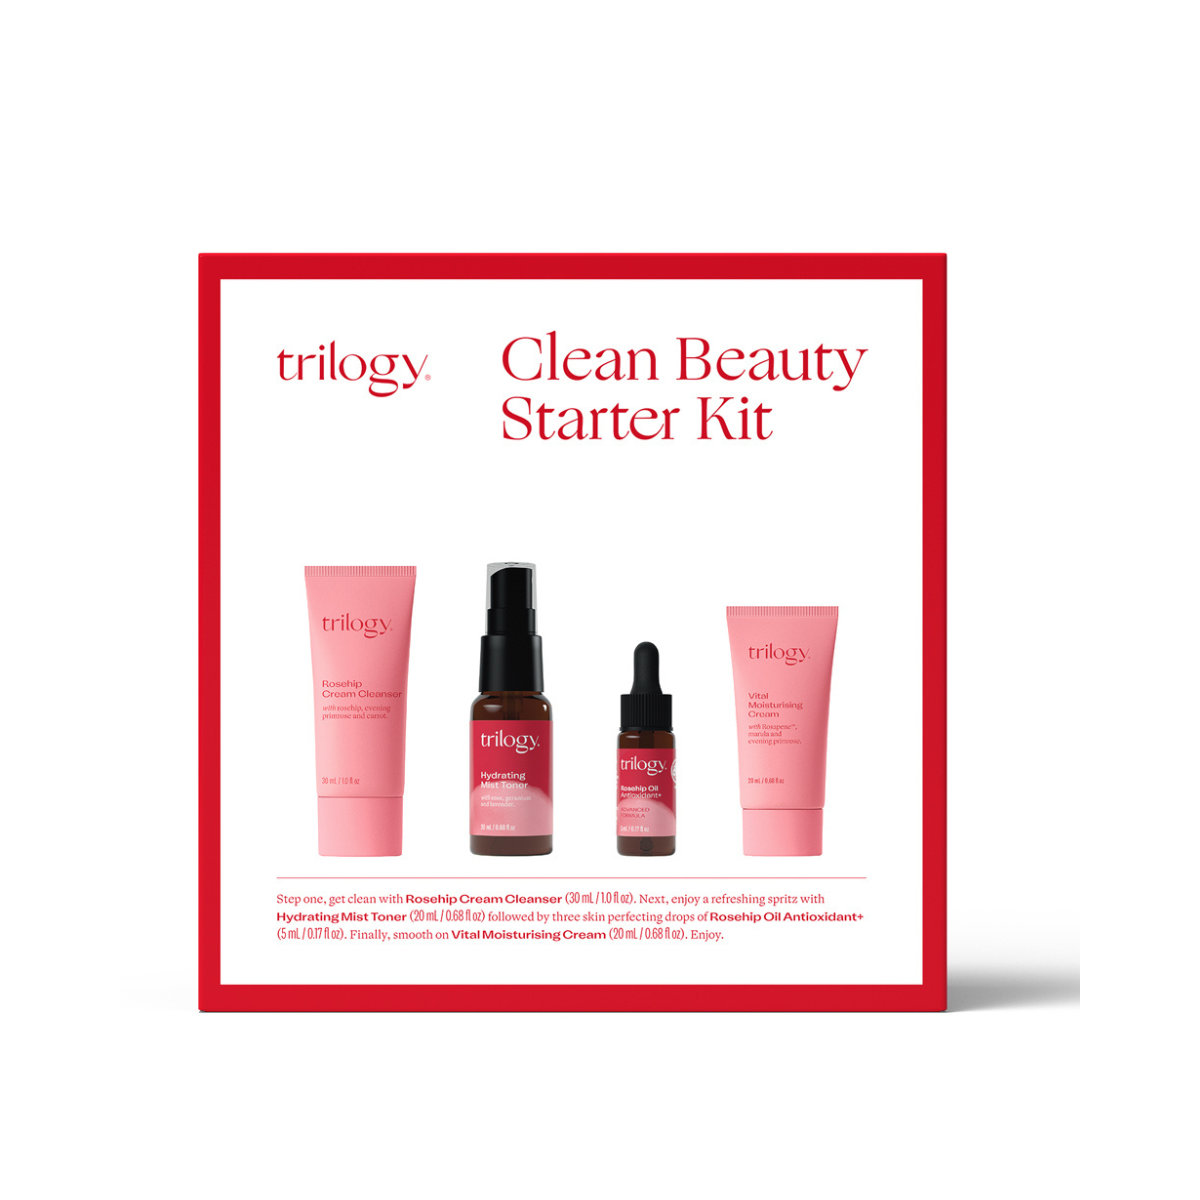 Trilogy Clean Beauty Starter Kit Gift Set